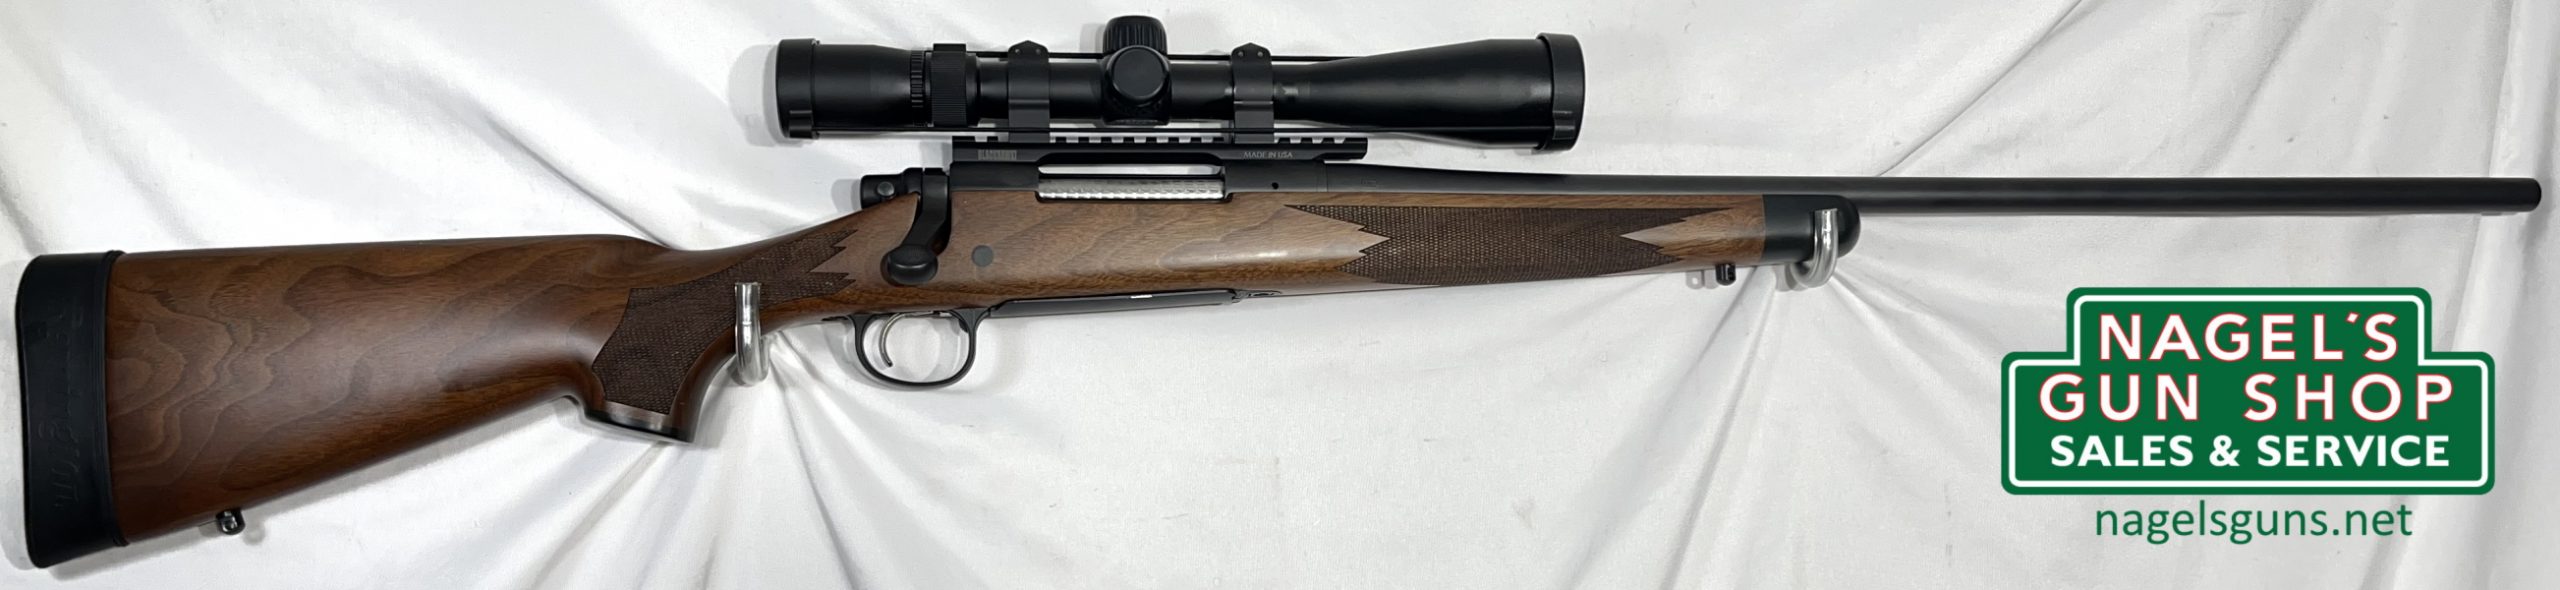 Remington 700 270 Win Rifle